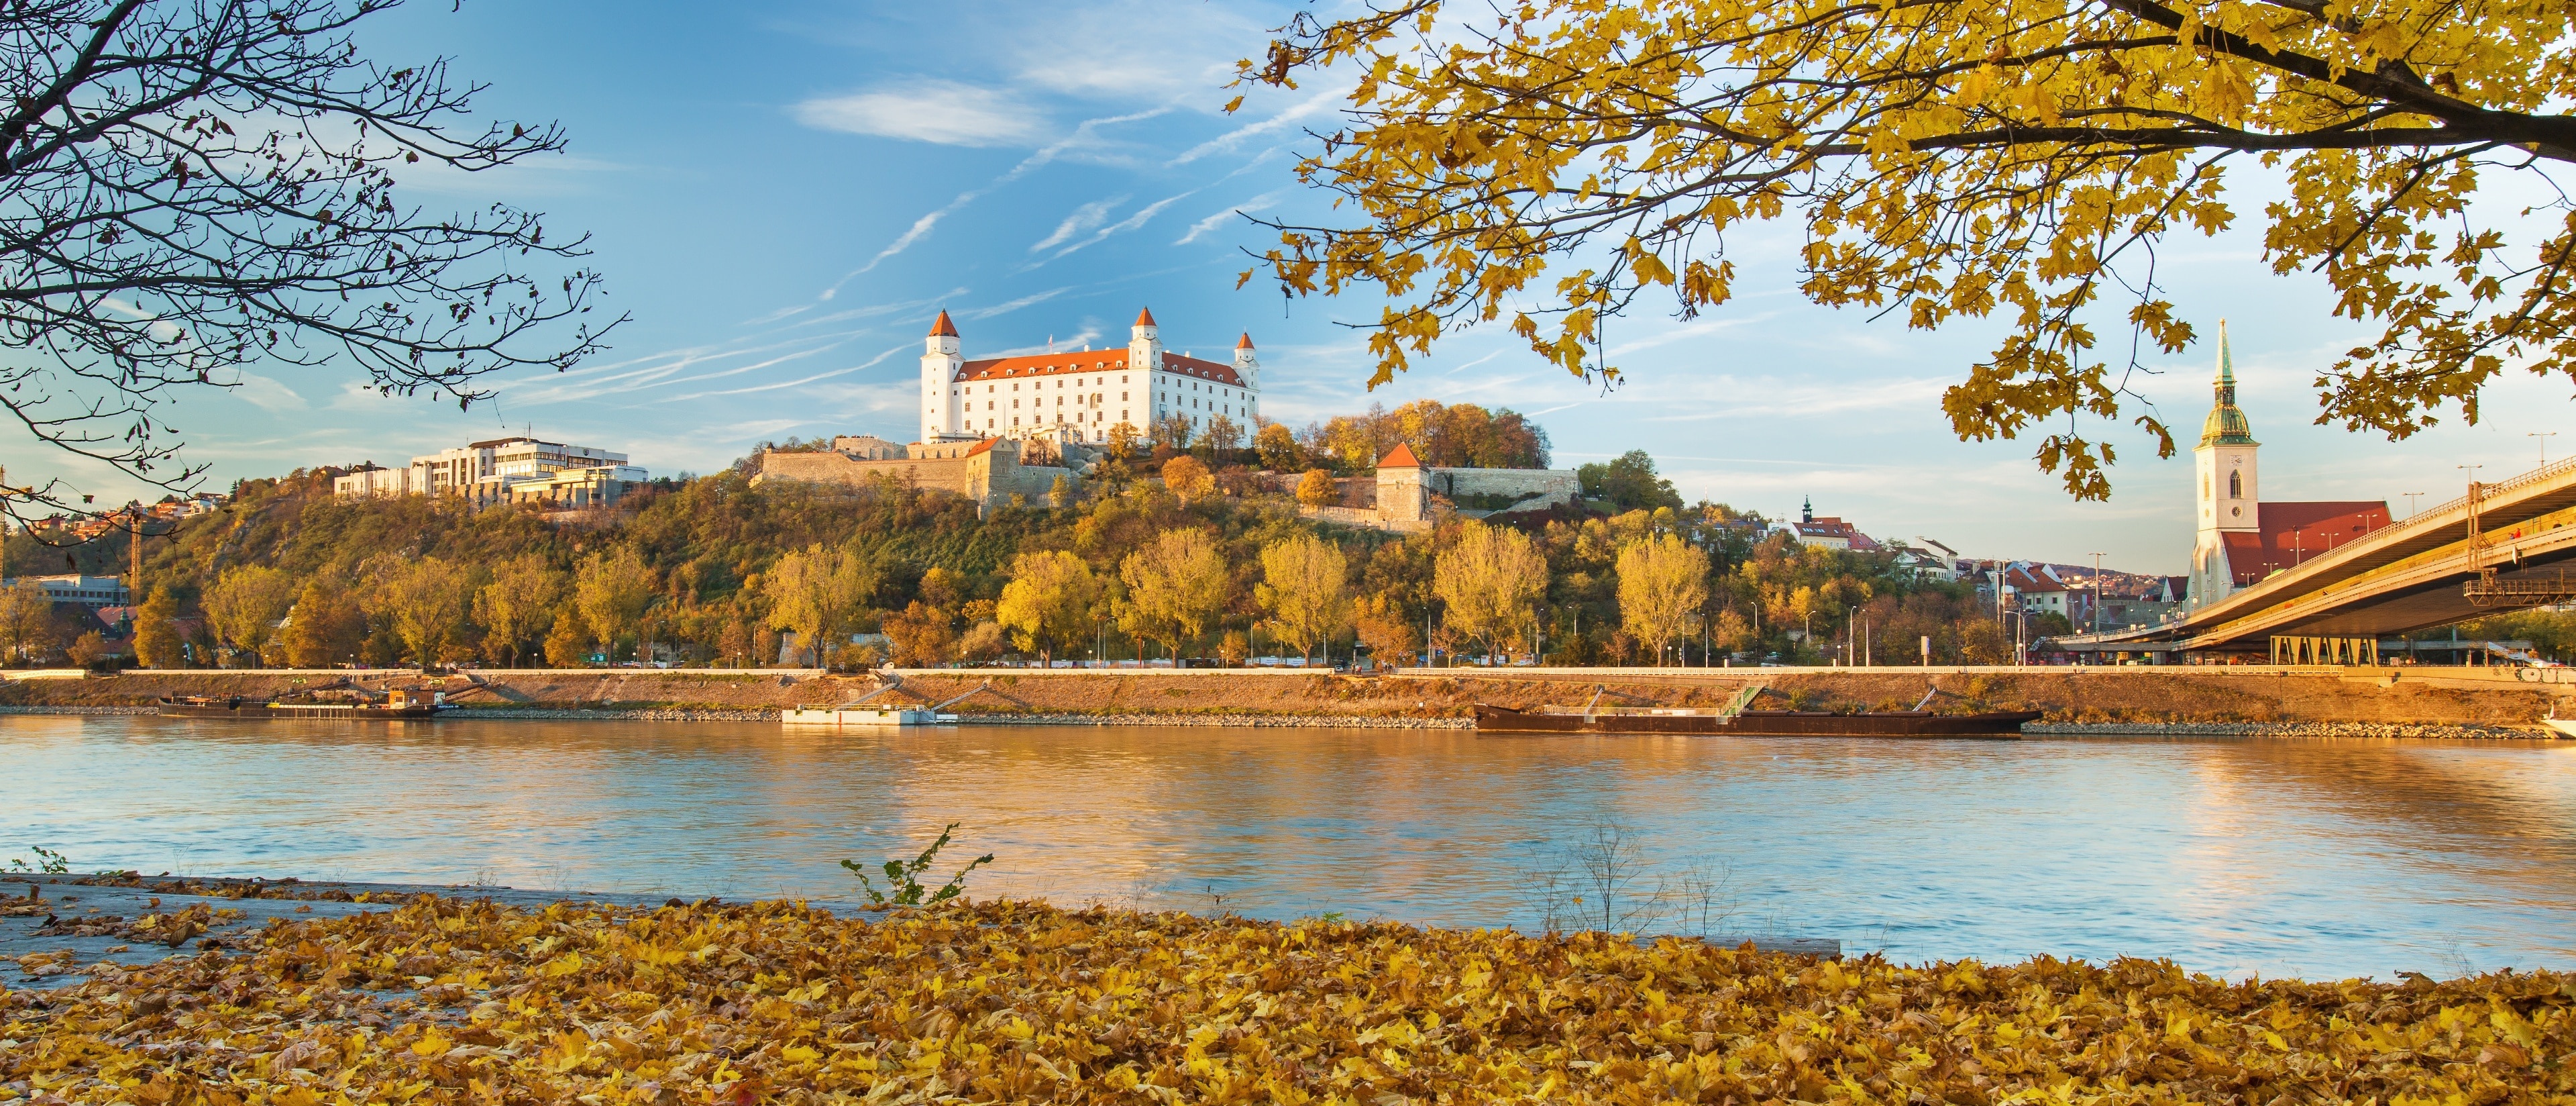 Bratislava hotels, Gratis storno, Preisegarantie, 109 hotels, 3840x1650 Dual Screen Desktop